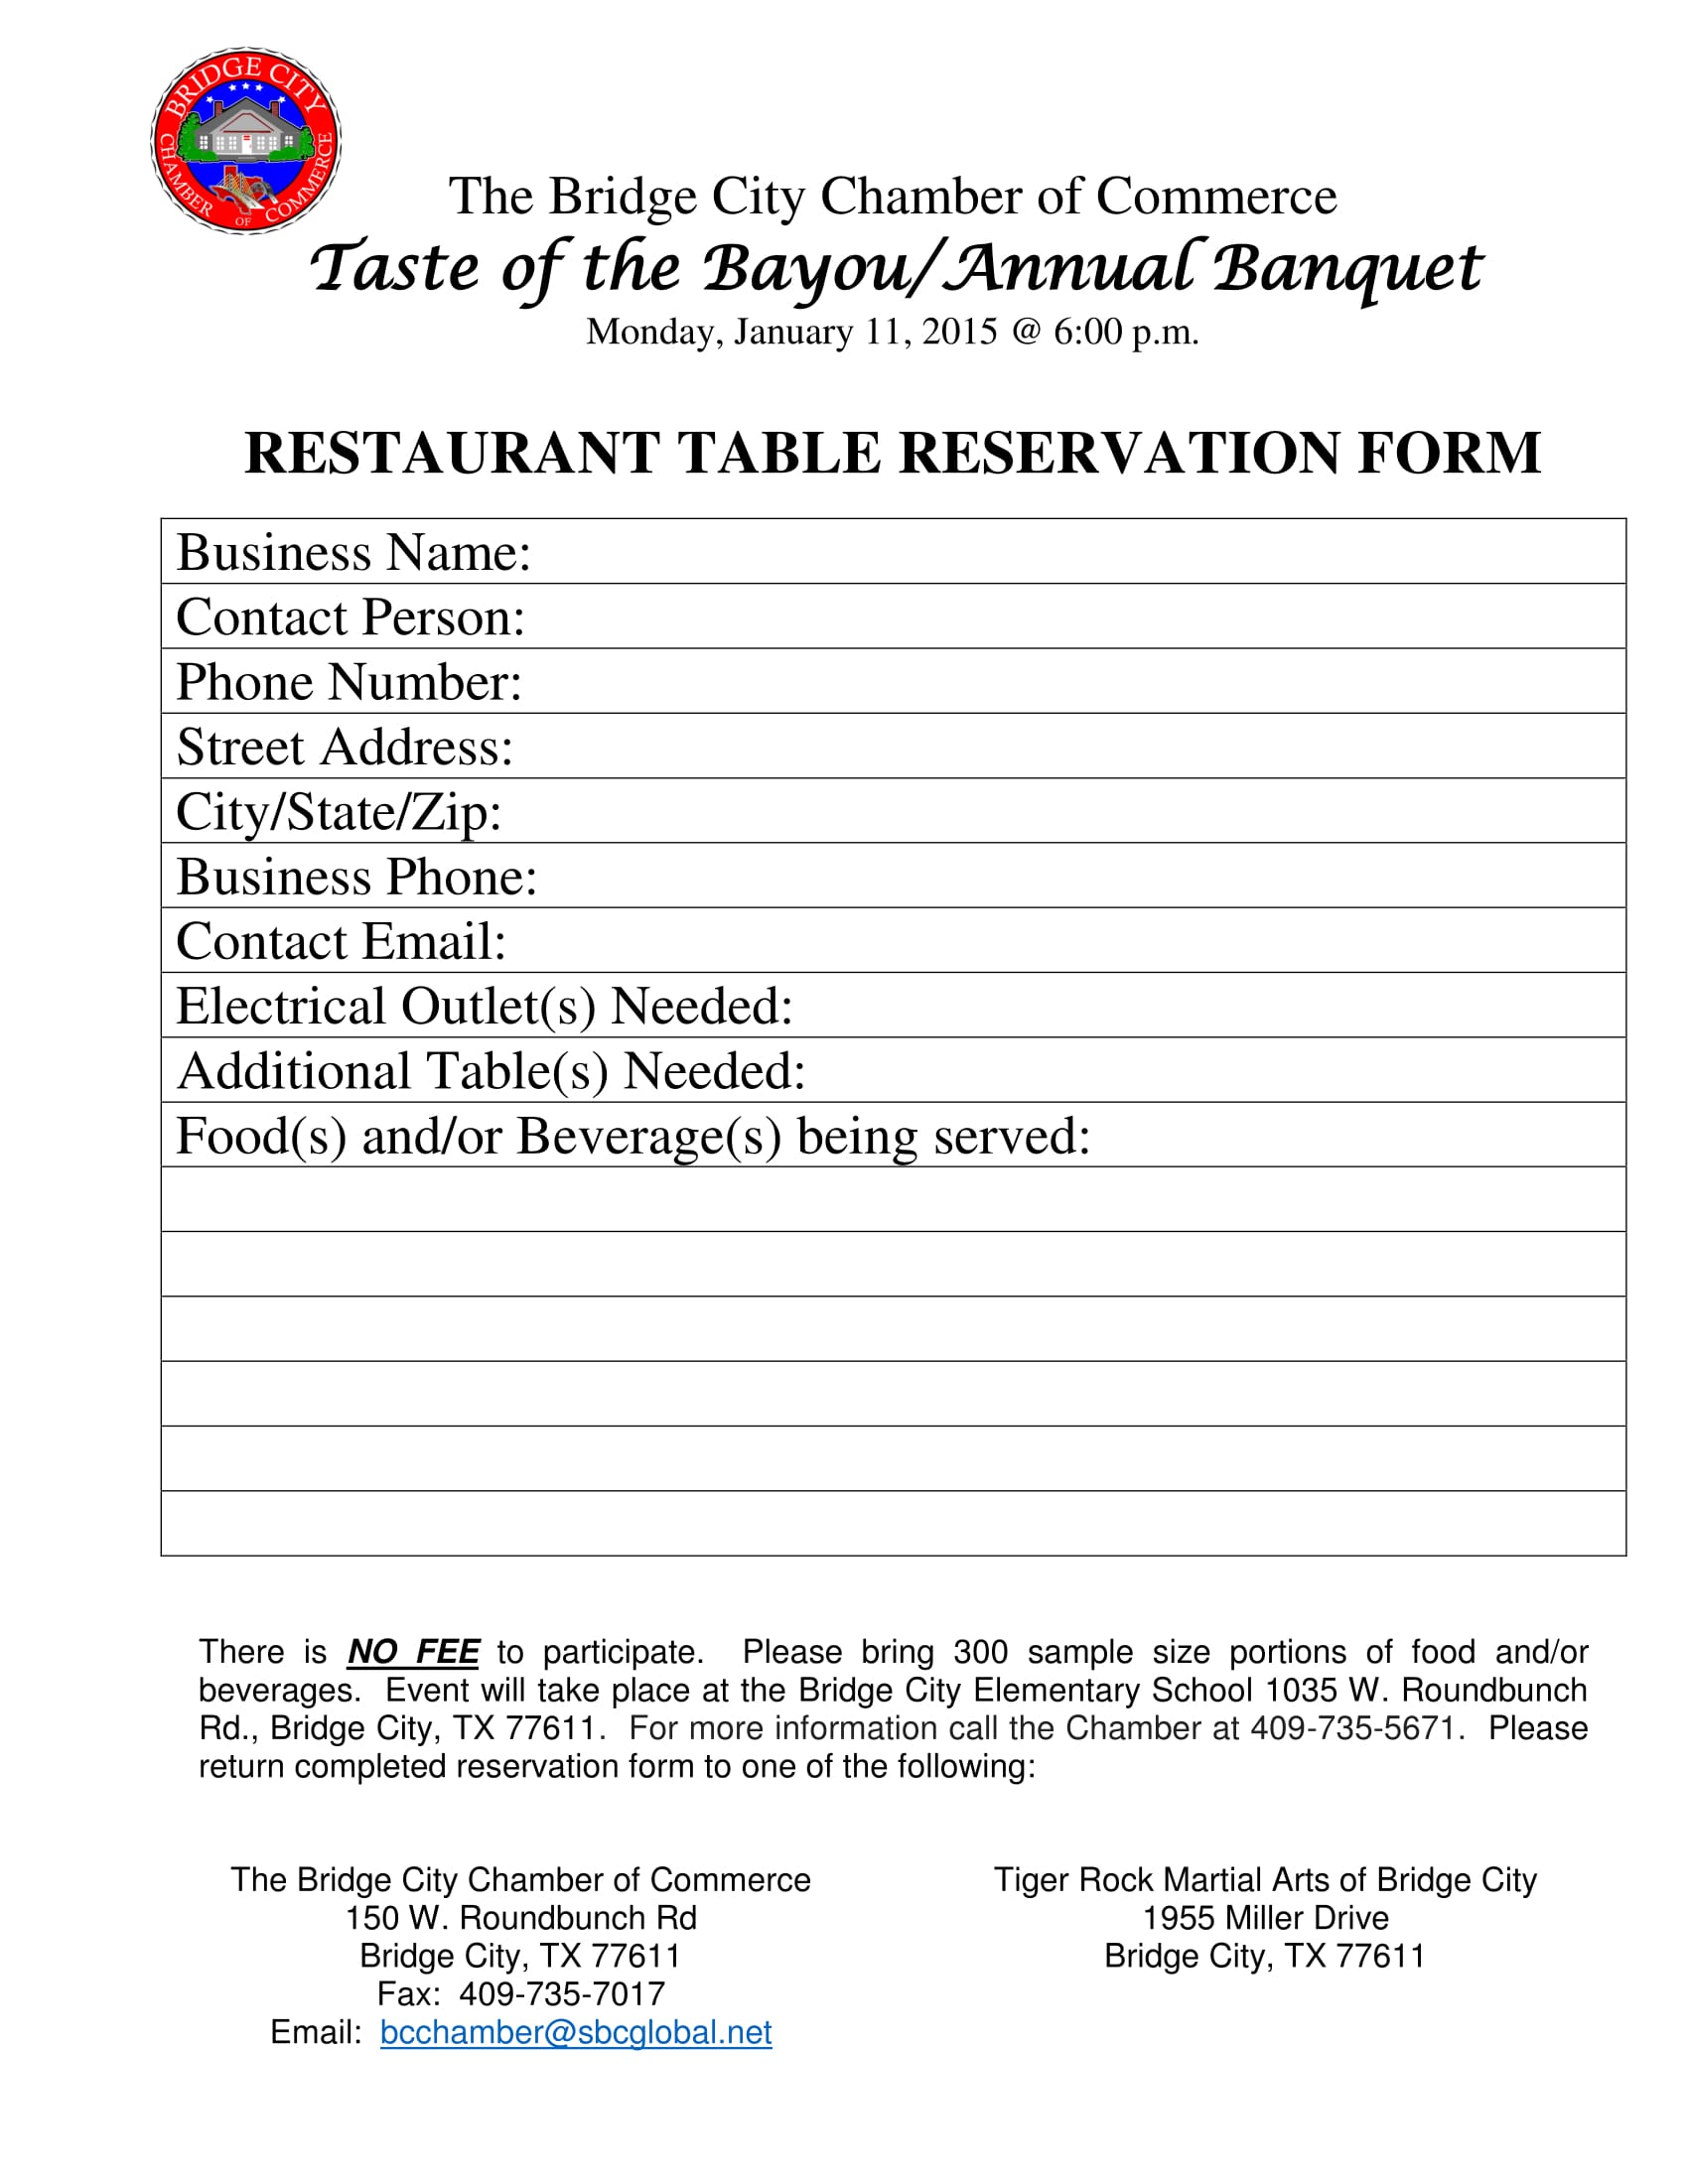 annual banquet restaurant reservation form 1